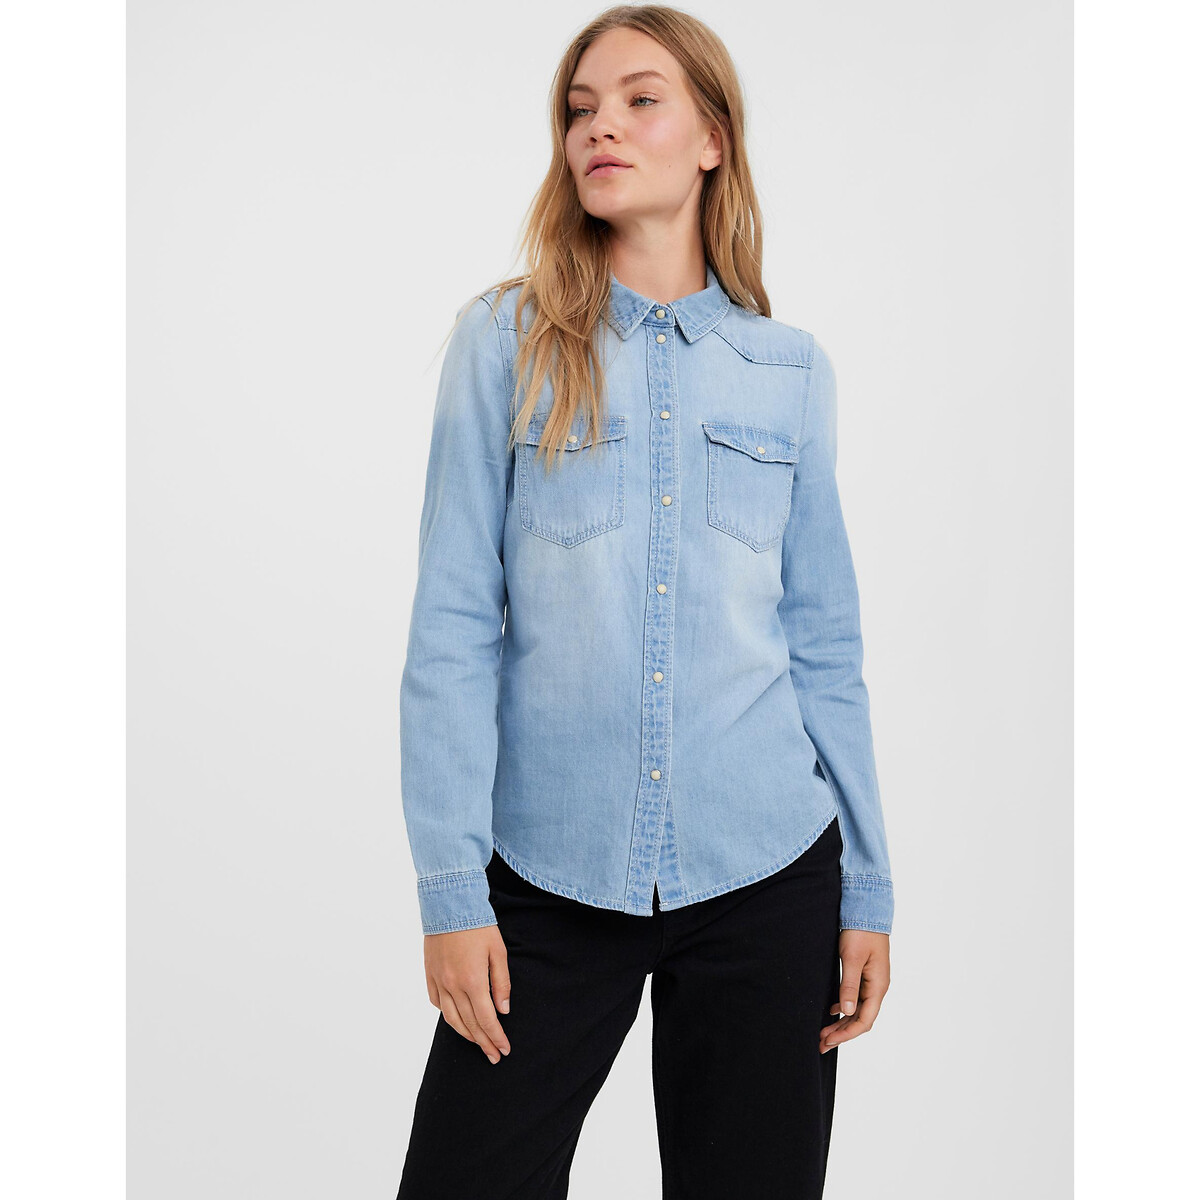 Рубашка Из джинсовой ткани XL синий LaRedoute, размер XL - фото 1